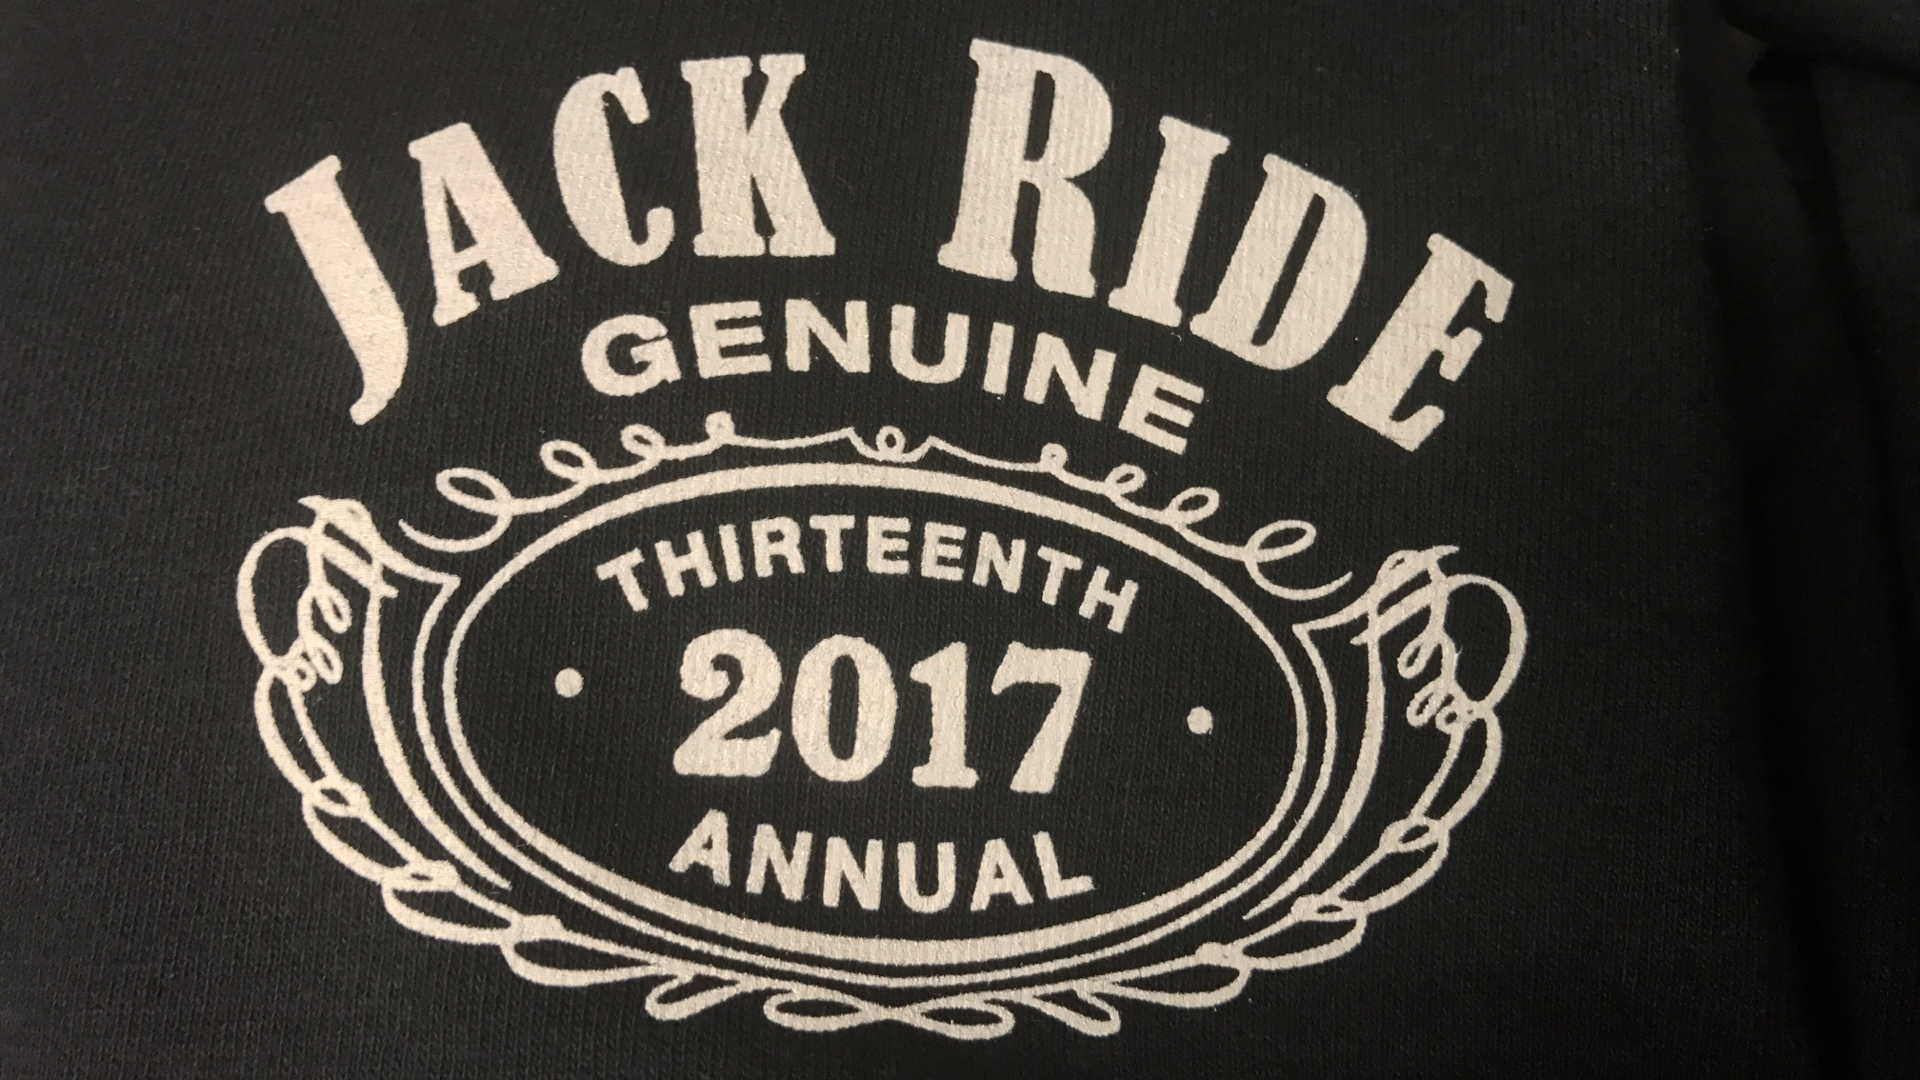 Jack Ride 2017, Knobtown Cycle